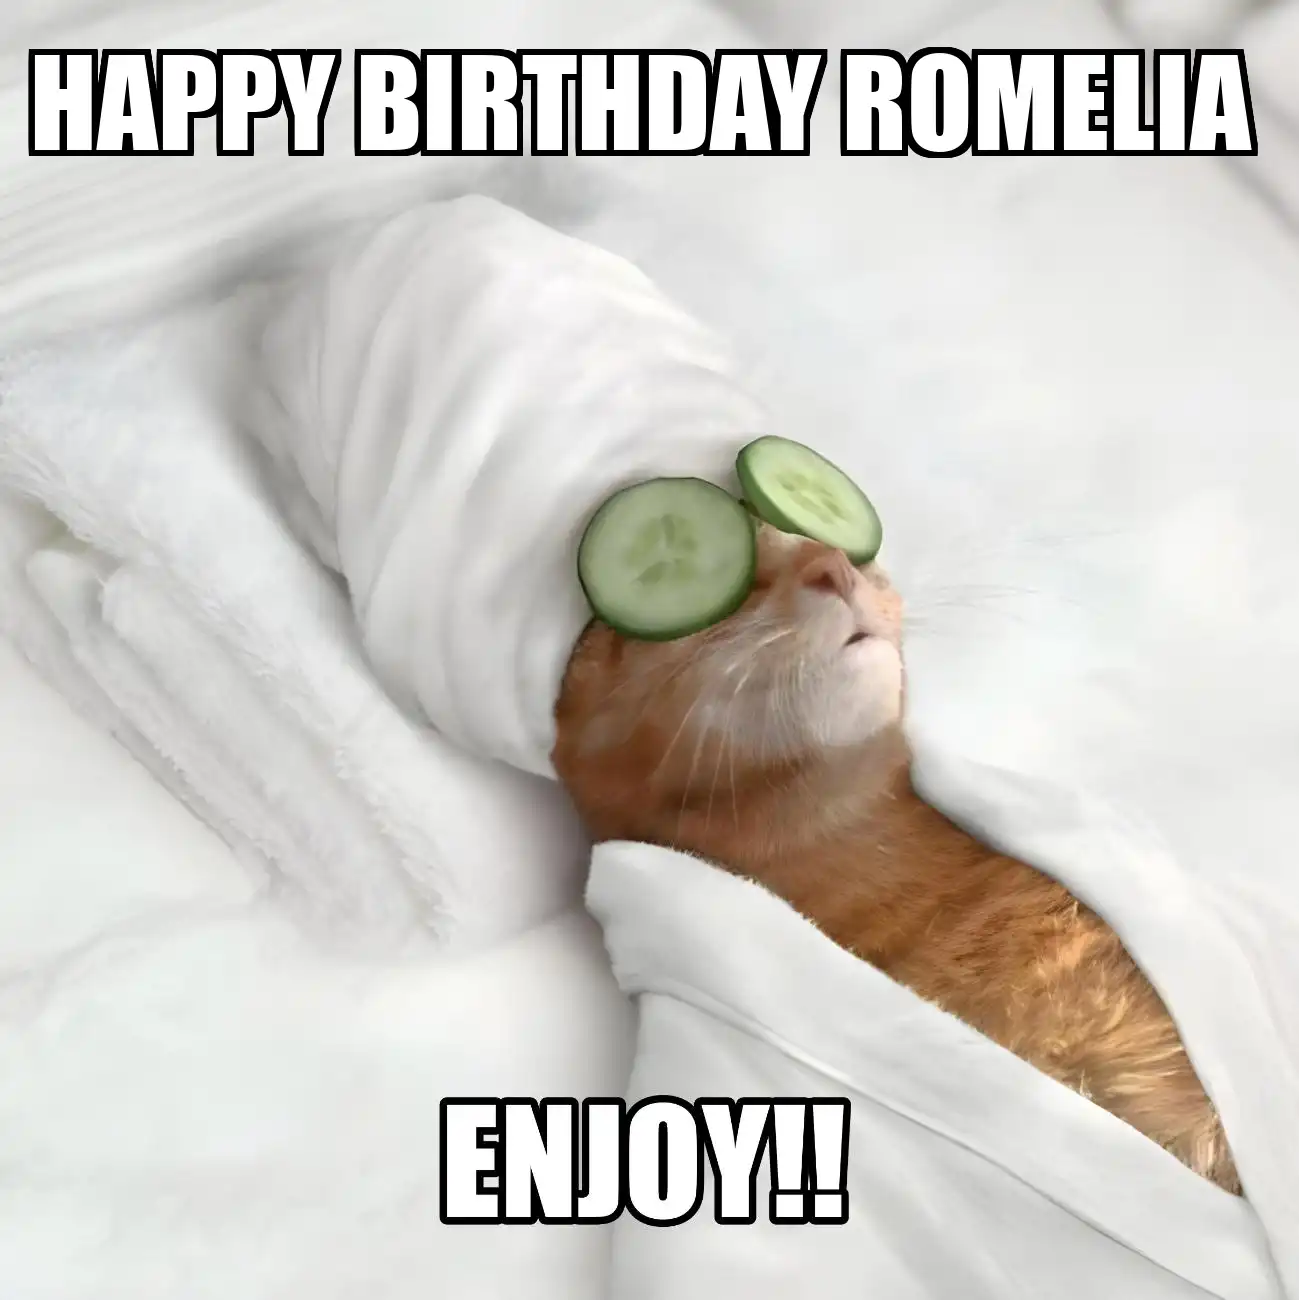 Happy Birthday Romelia Enjoy Cat Meme